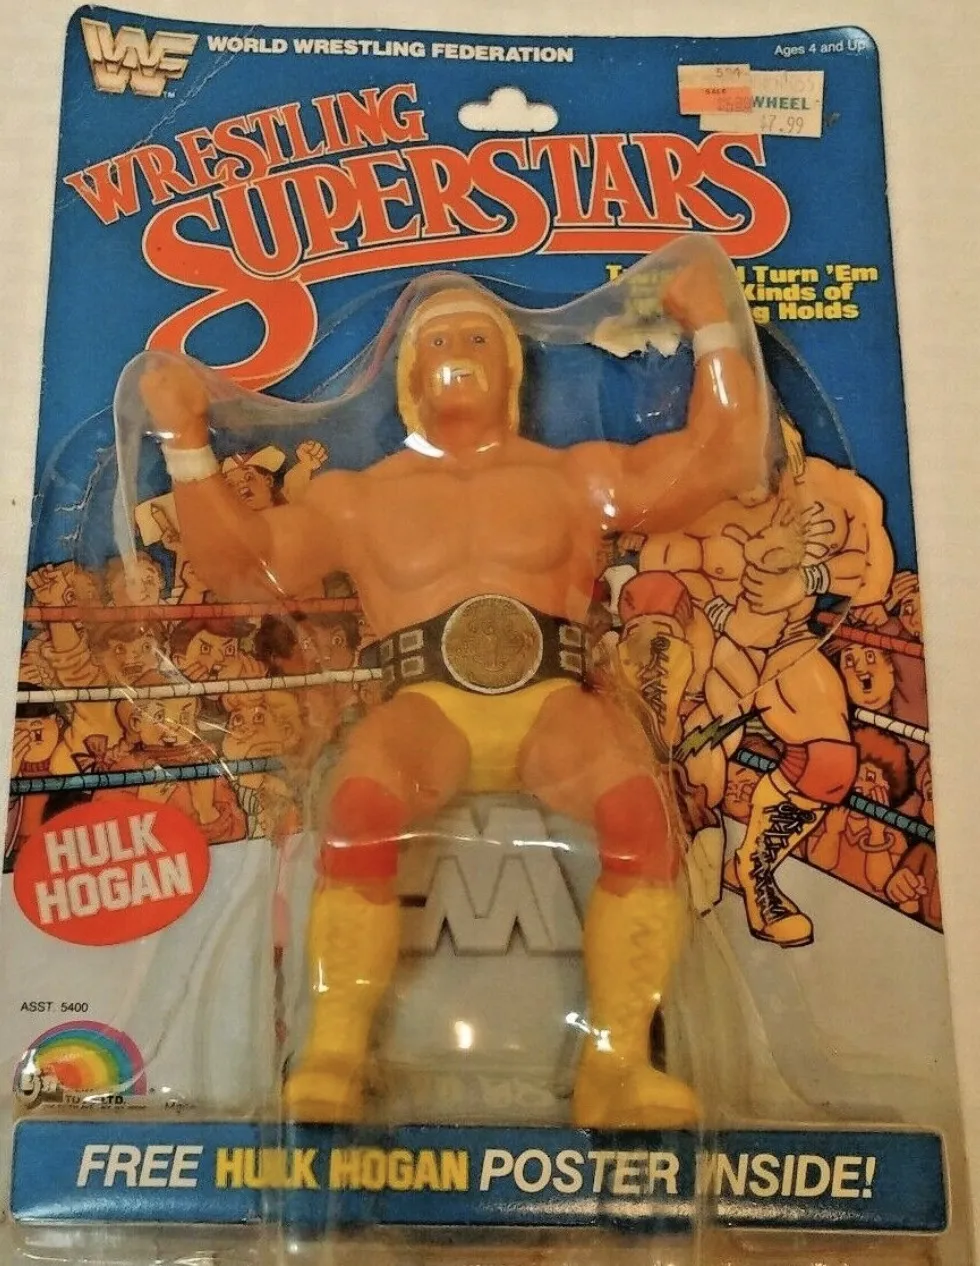 Hulk Hogan LJN 1 action figure